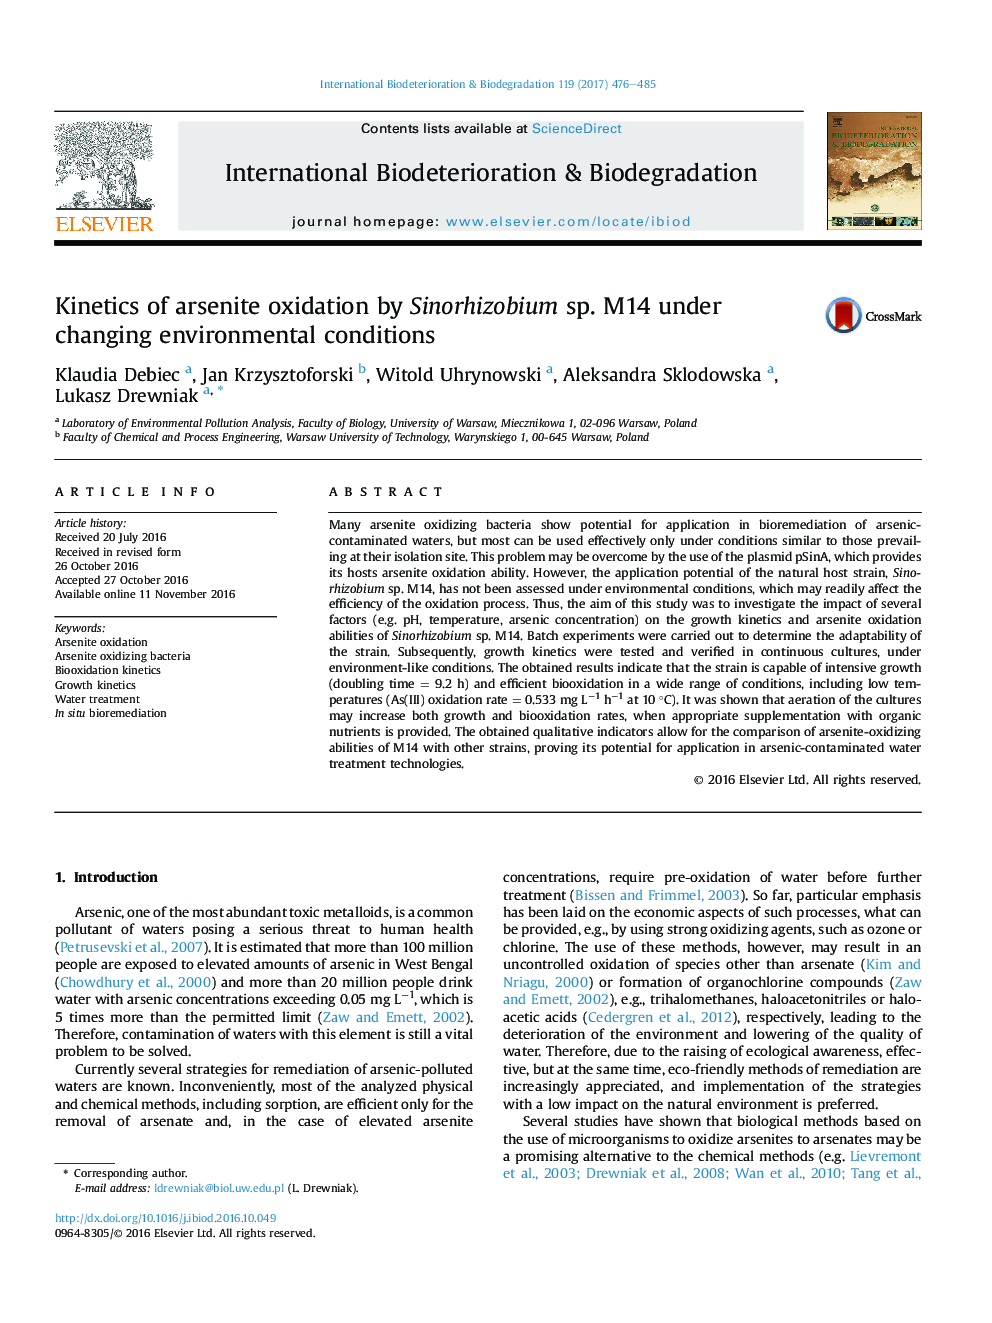 Kinetics of arsenite oxidation by Sinorhizobium sp. M14 under changing environmental conditions